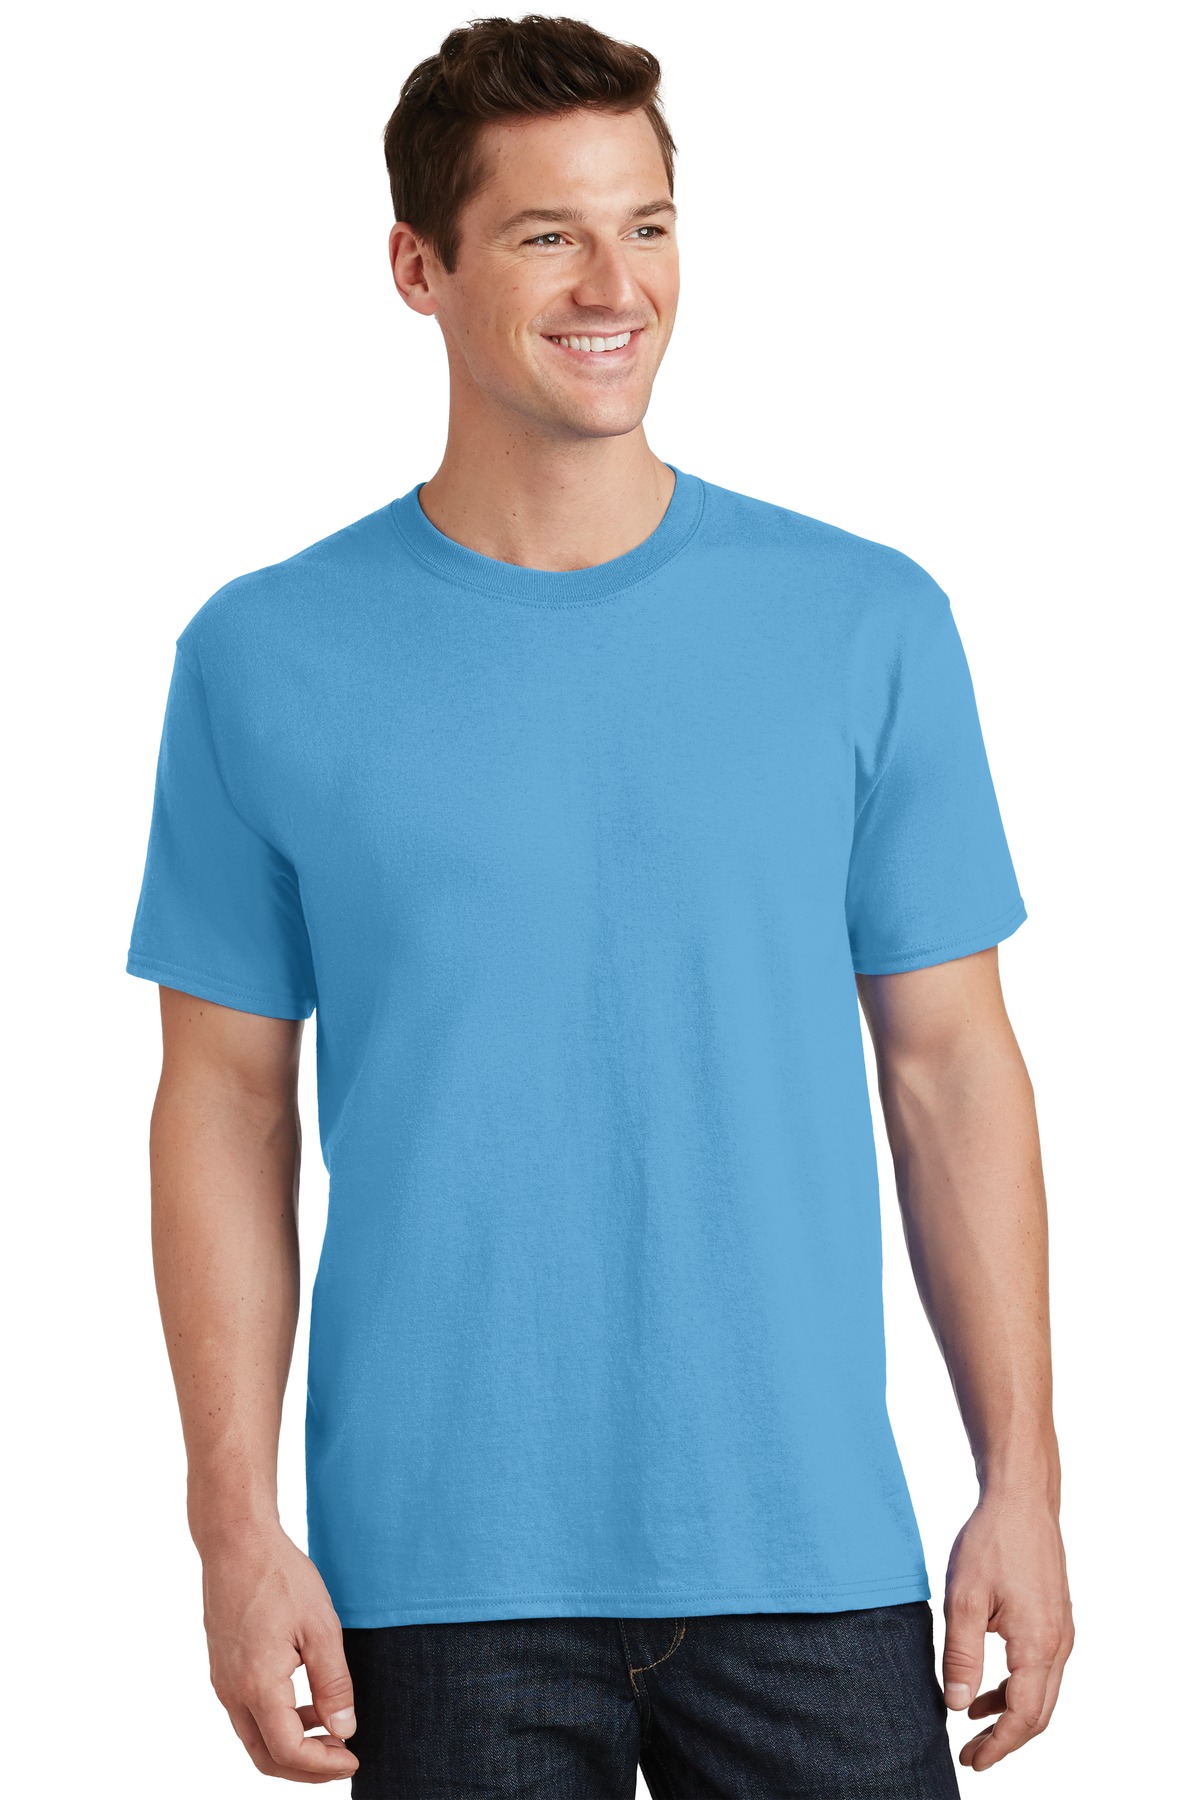 Port & Company Tall Core Cotton T-Shirt PC54T